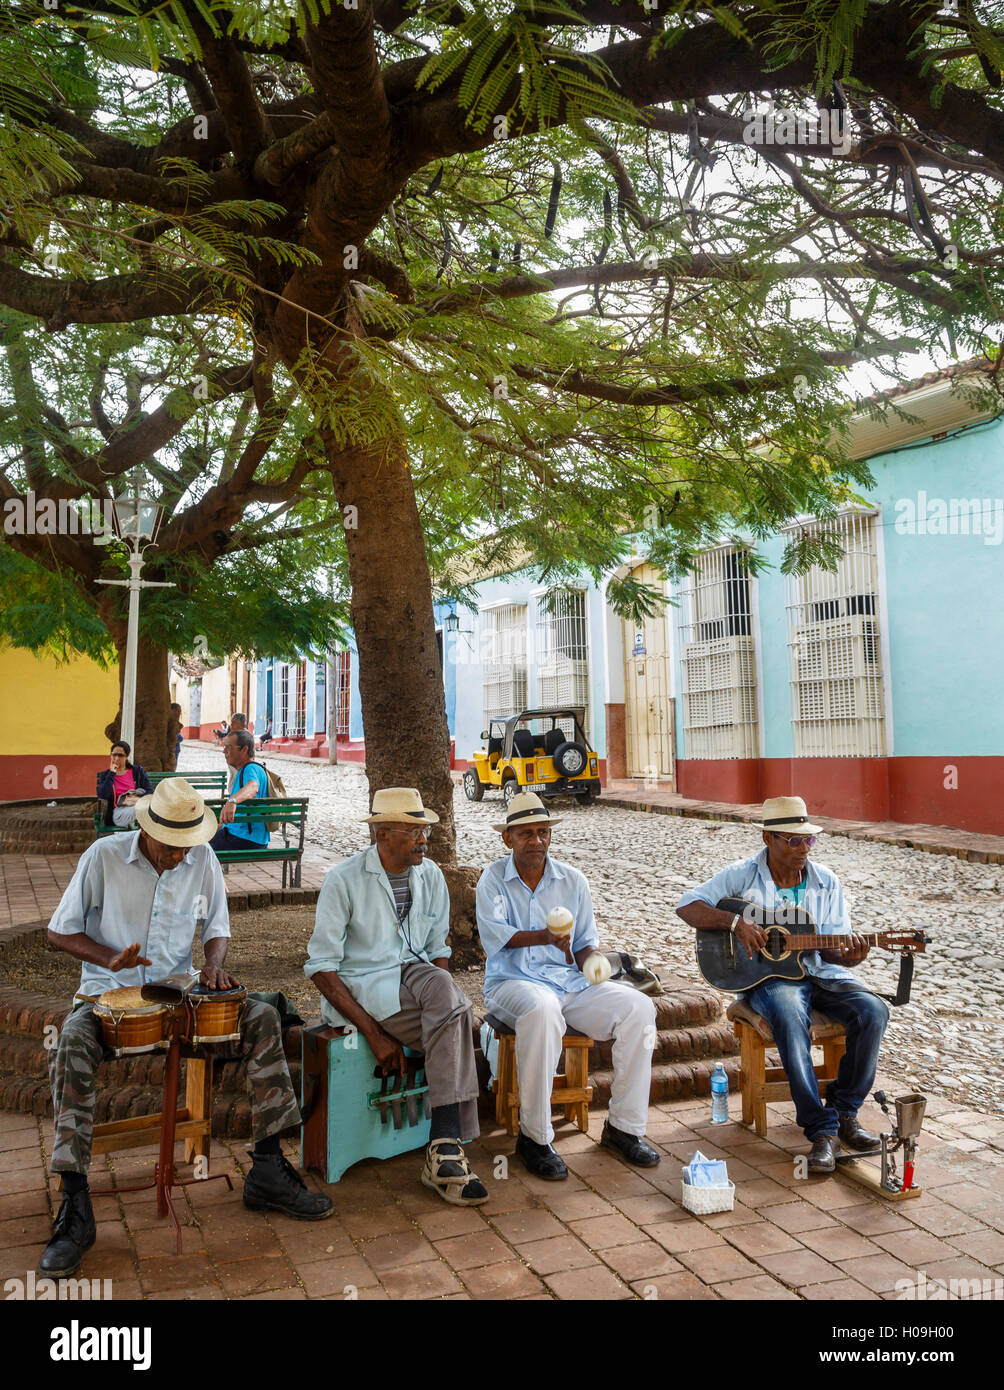 Musikband spielt auf einem Platz in Trinidad, Provinz Sancti Spiritus, Kuba, Karibik, Karibik, Mittelamerika Stockfoto